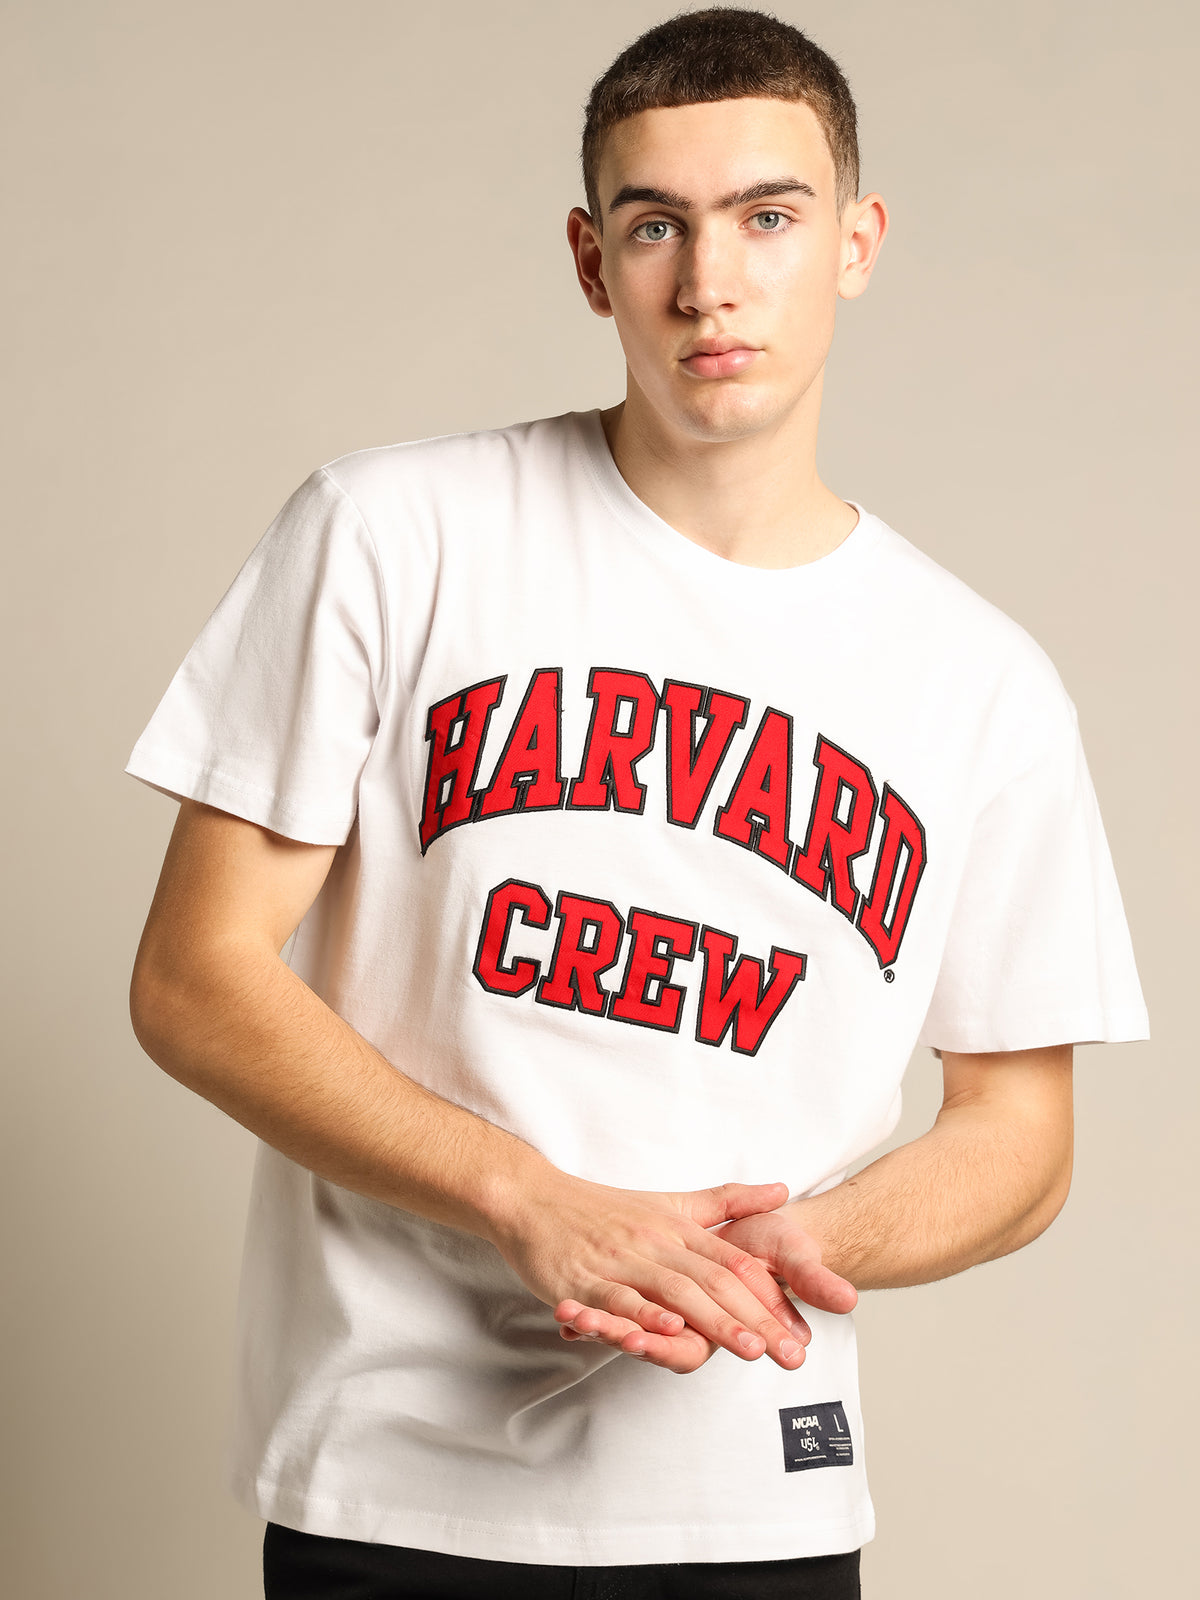 Harvard College Crew T-Shirt in White